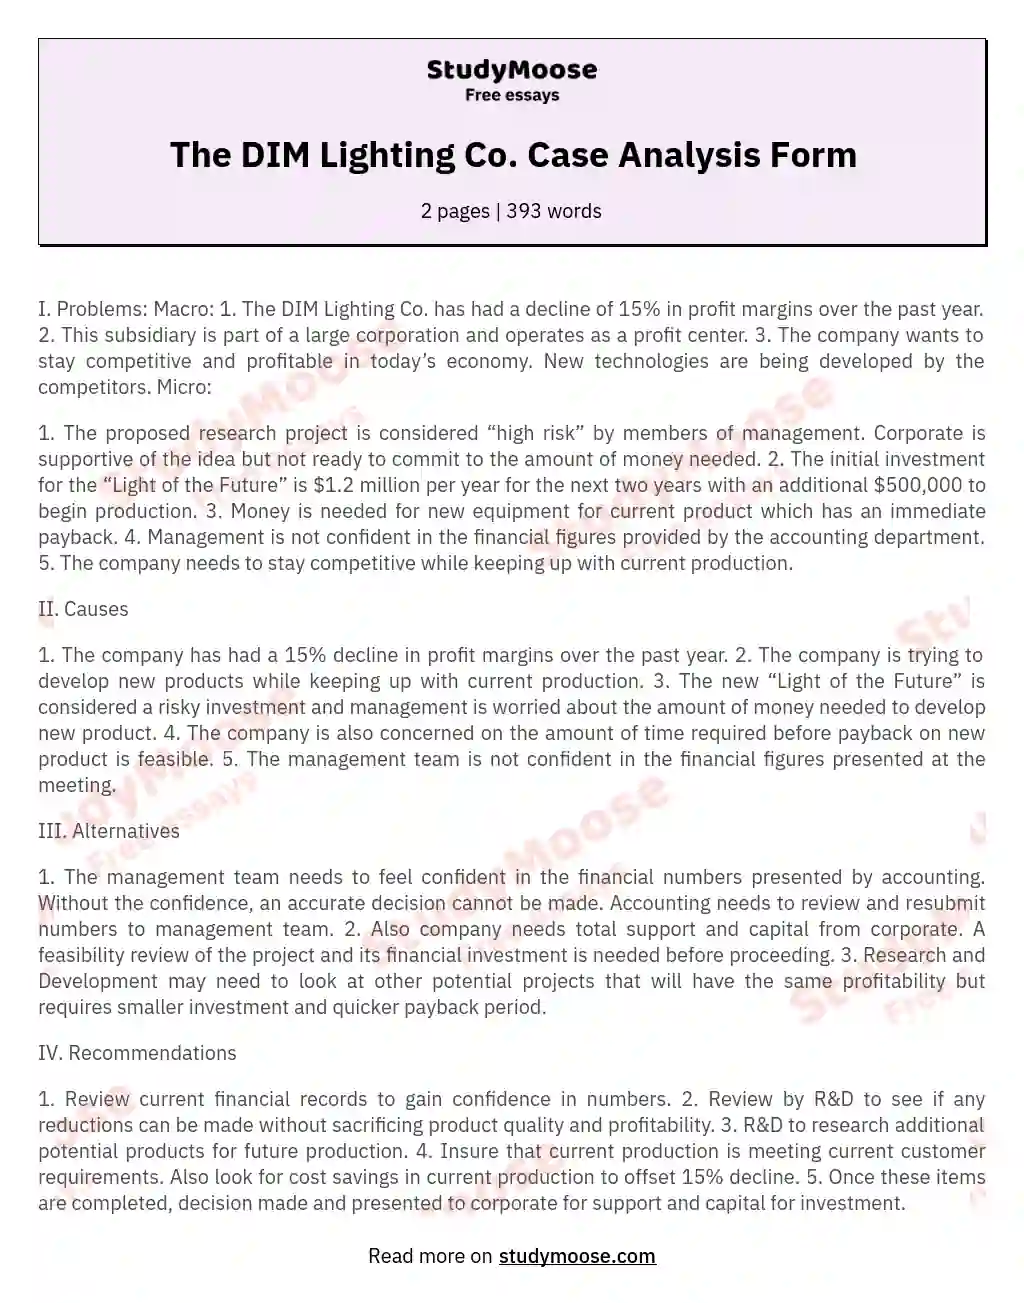 The DIM Lighting Co. Case Analysis Form essay